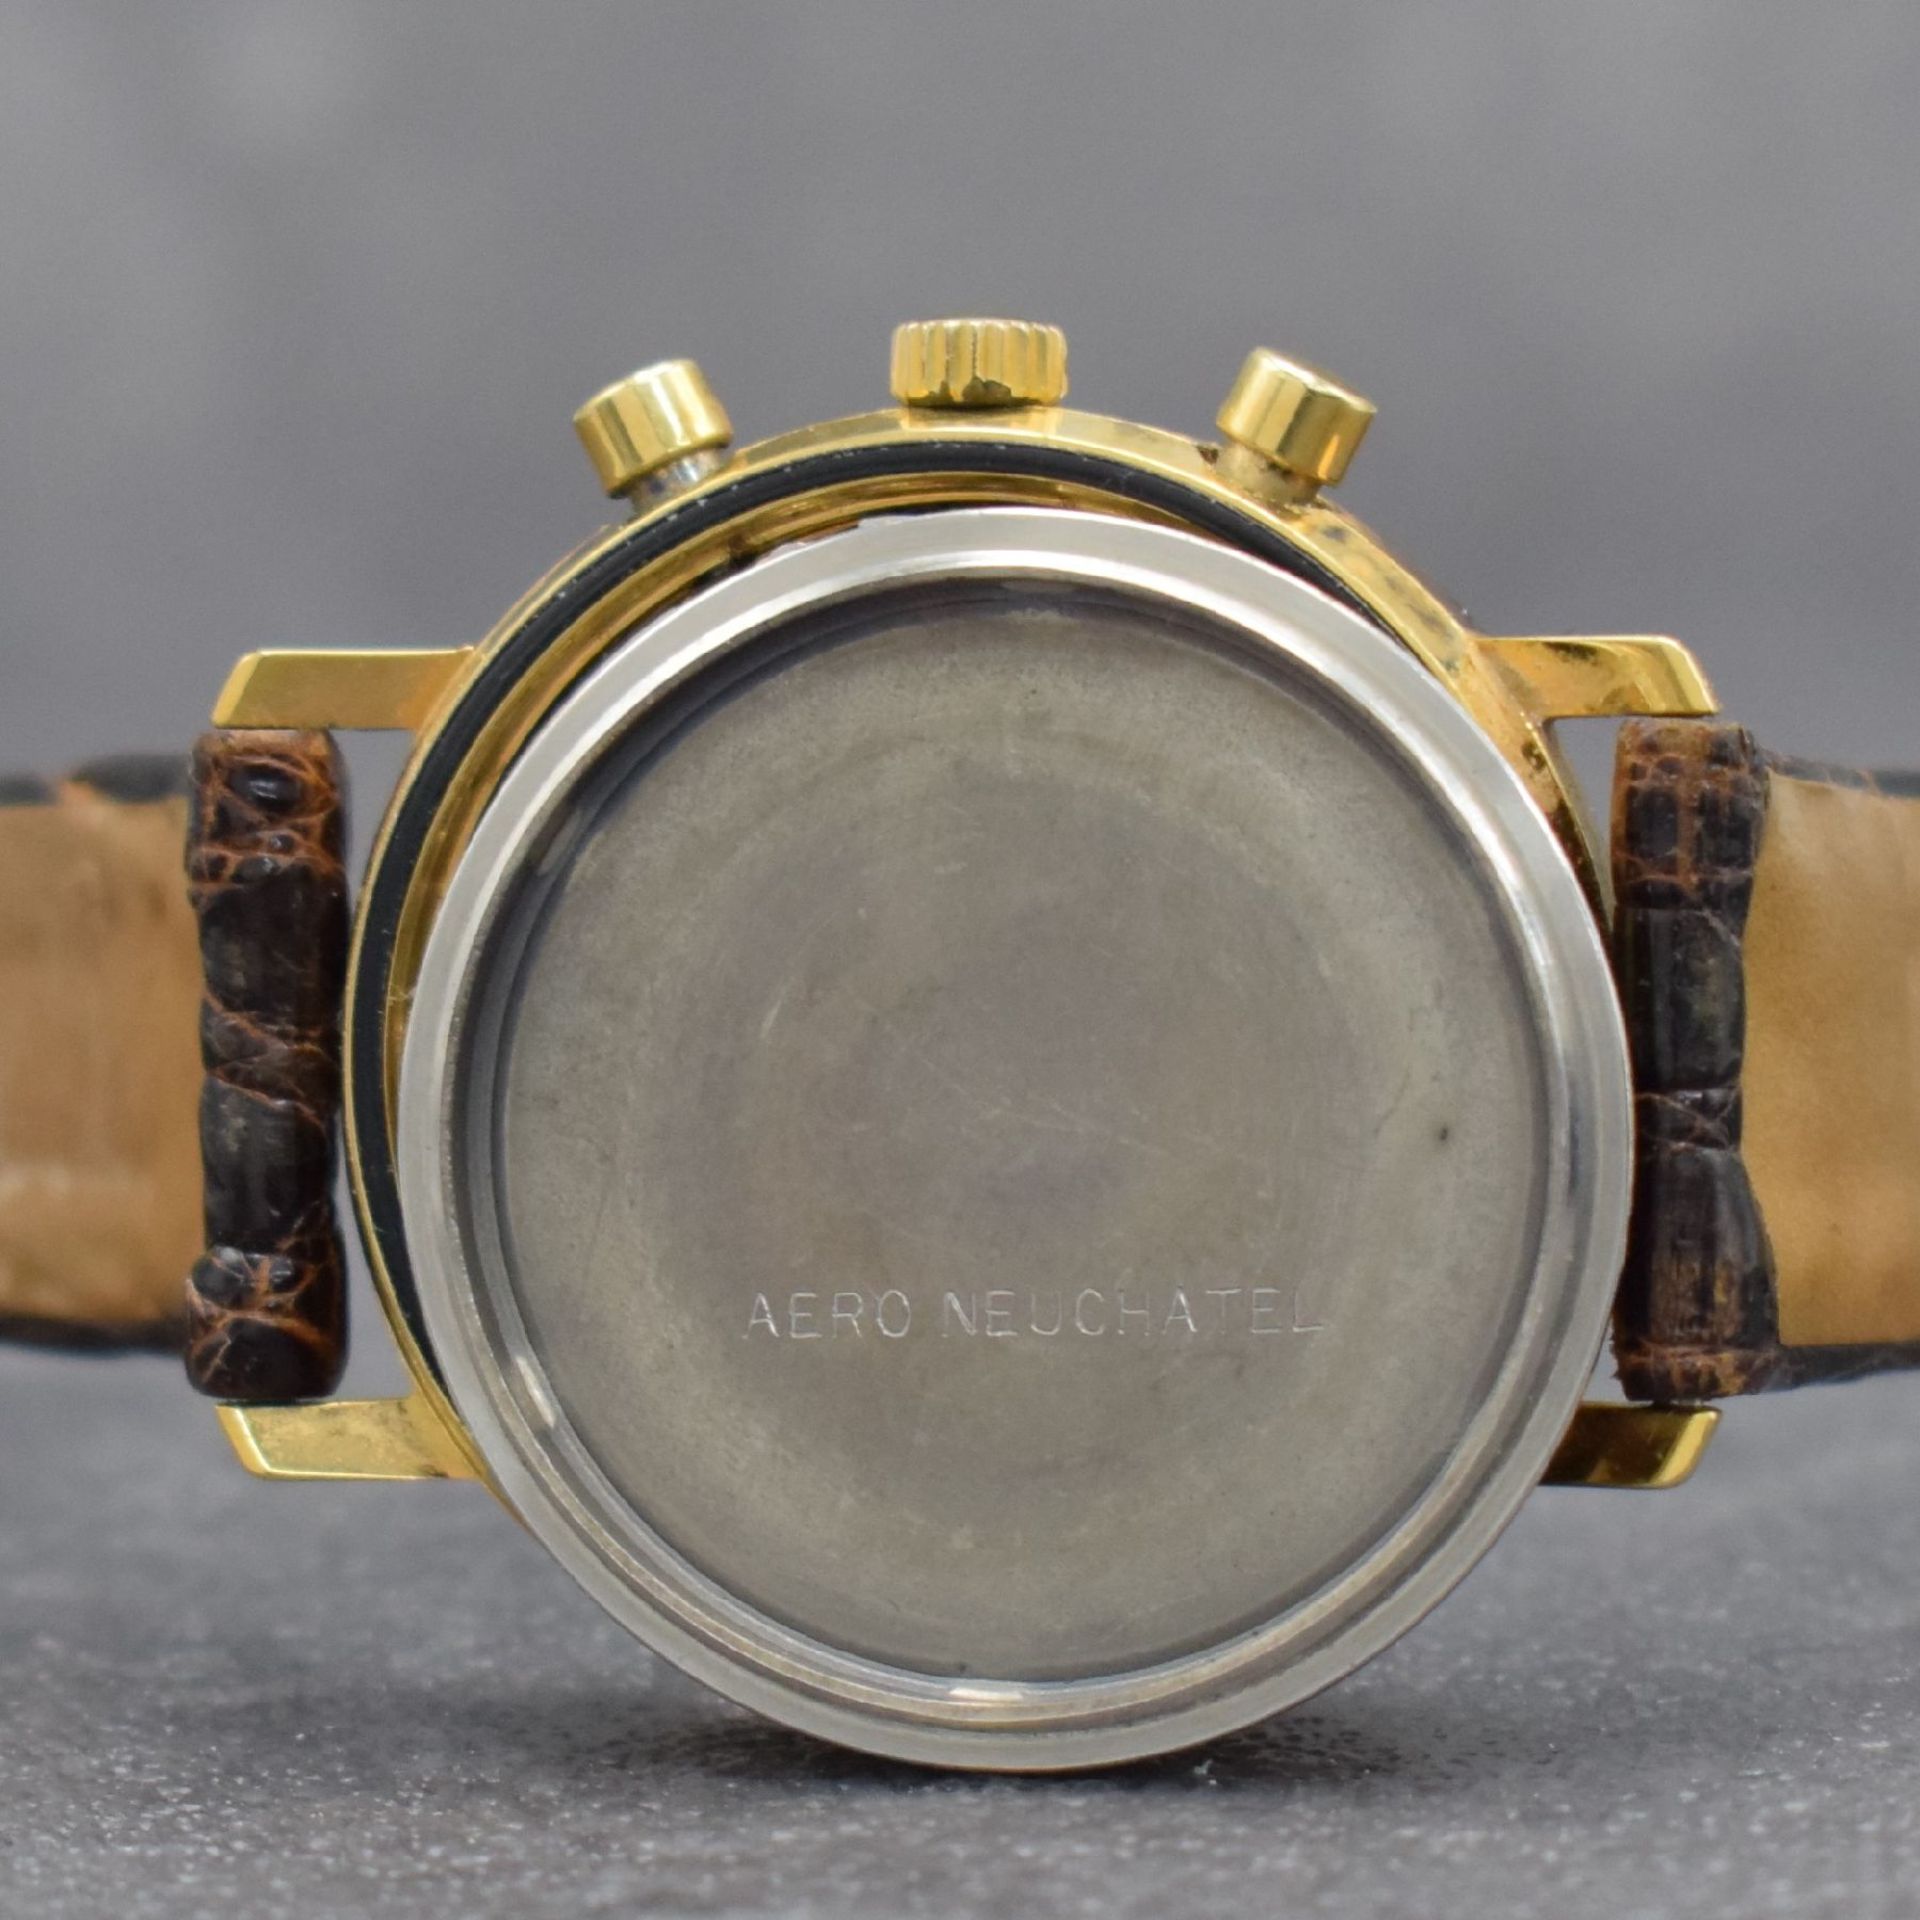 AERO WATCH vergoldeter Herrenchronograph mit Mondphase, - Image 9 of 9